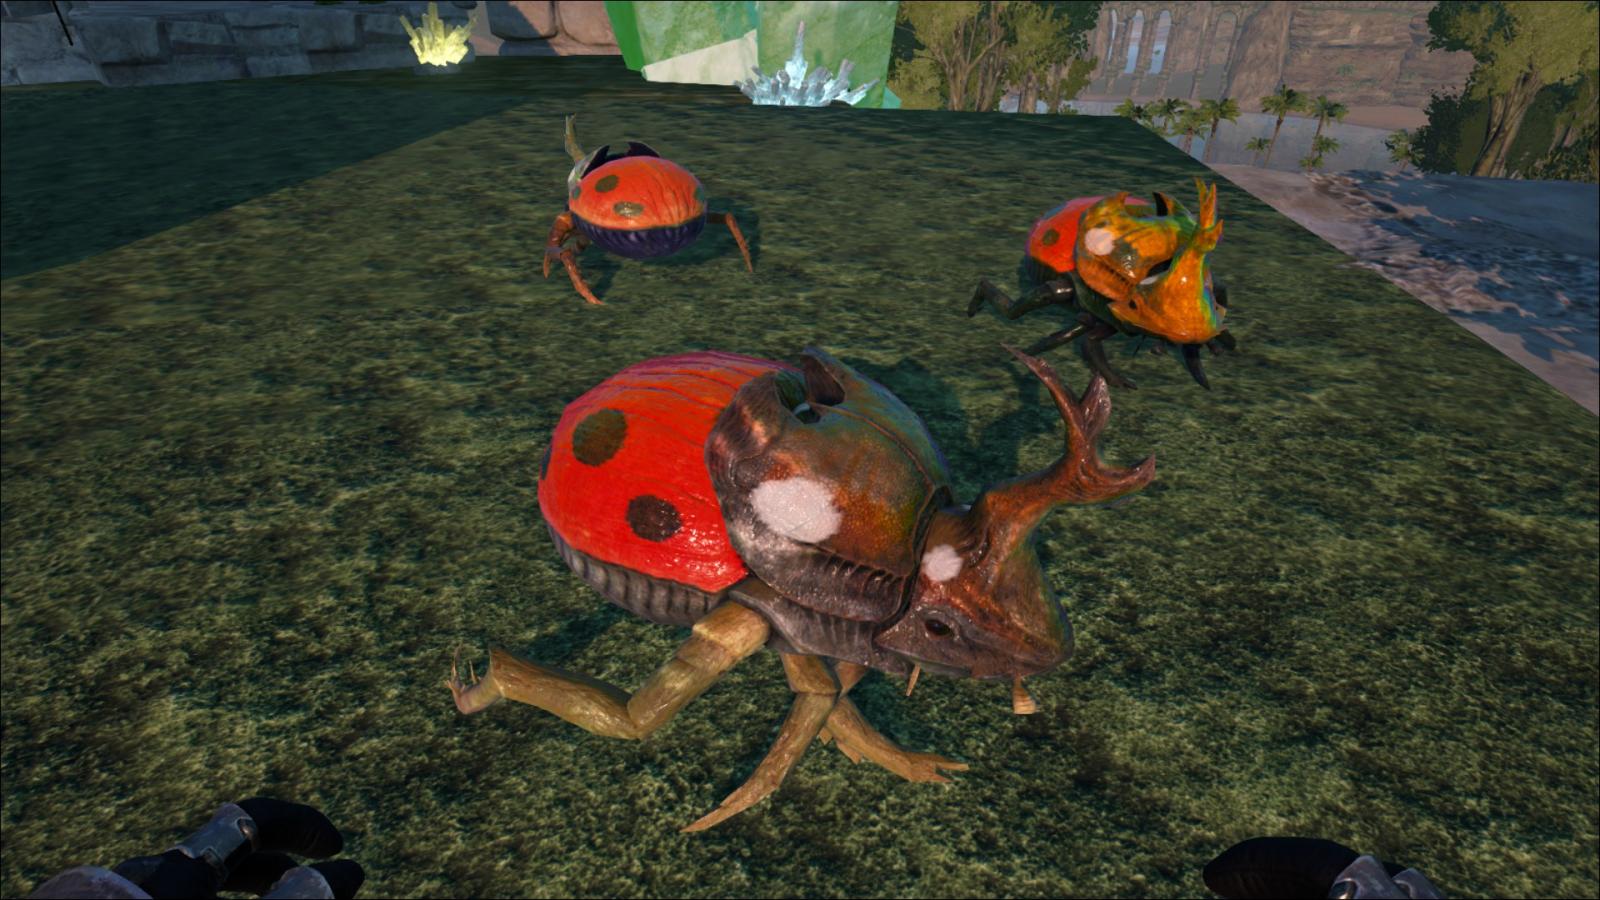 Ladybug Dungbeetle by Sharkcat